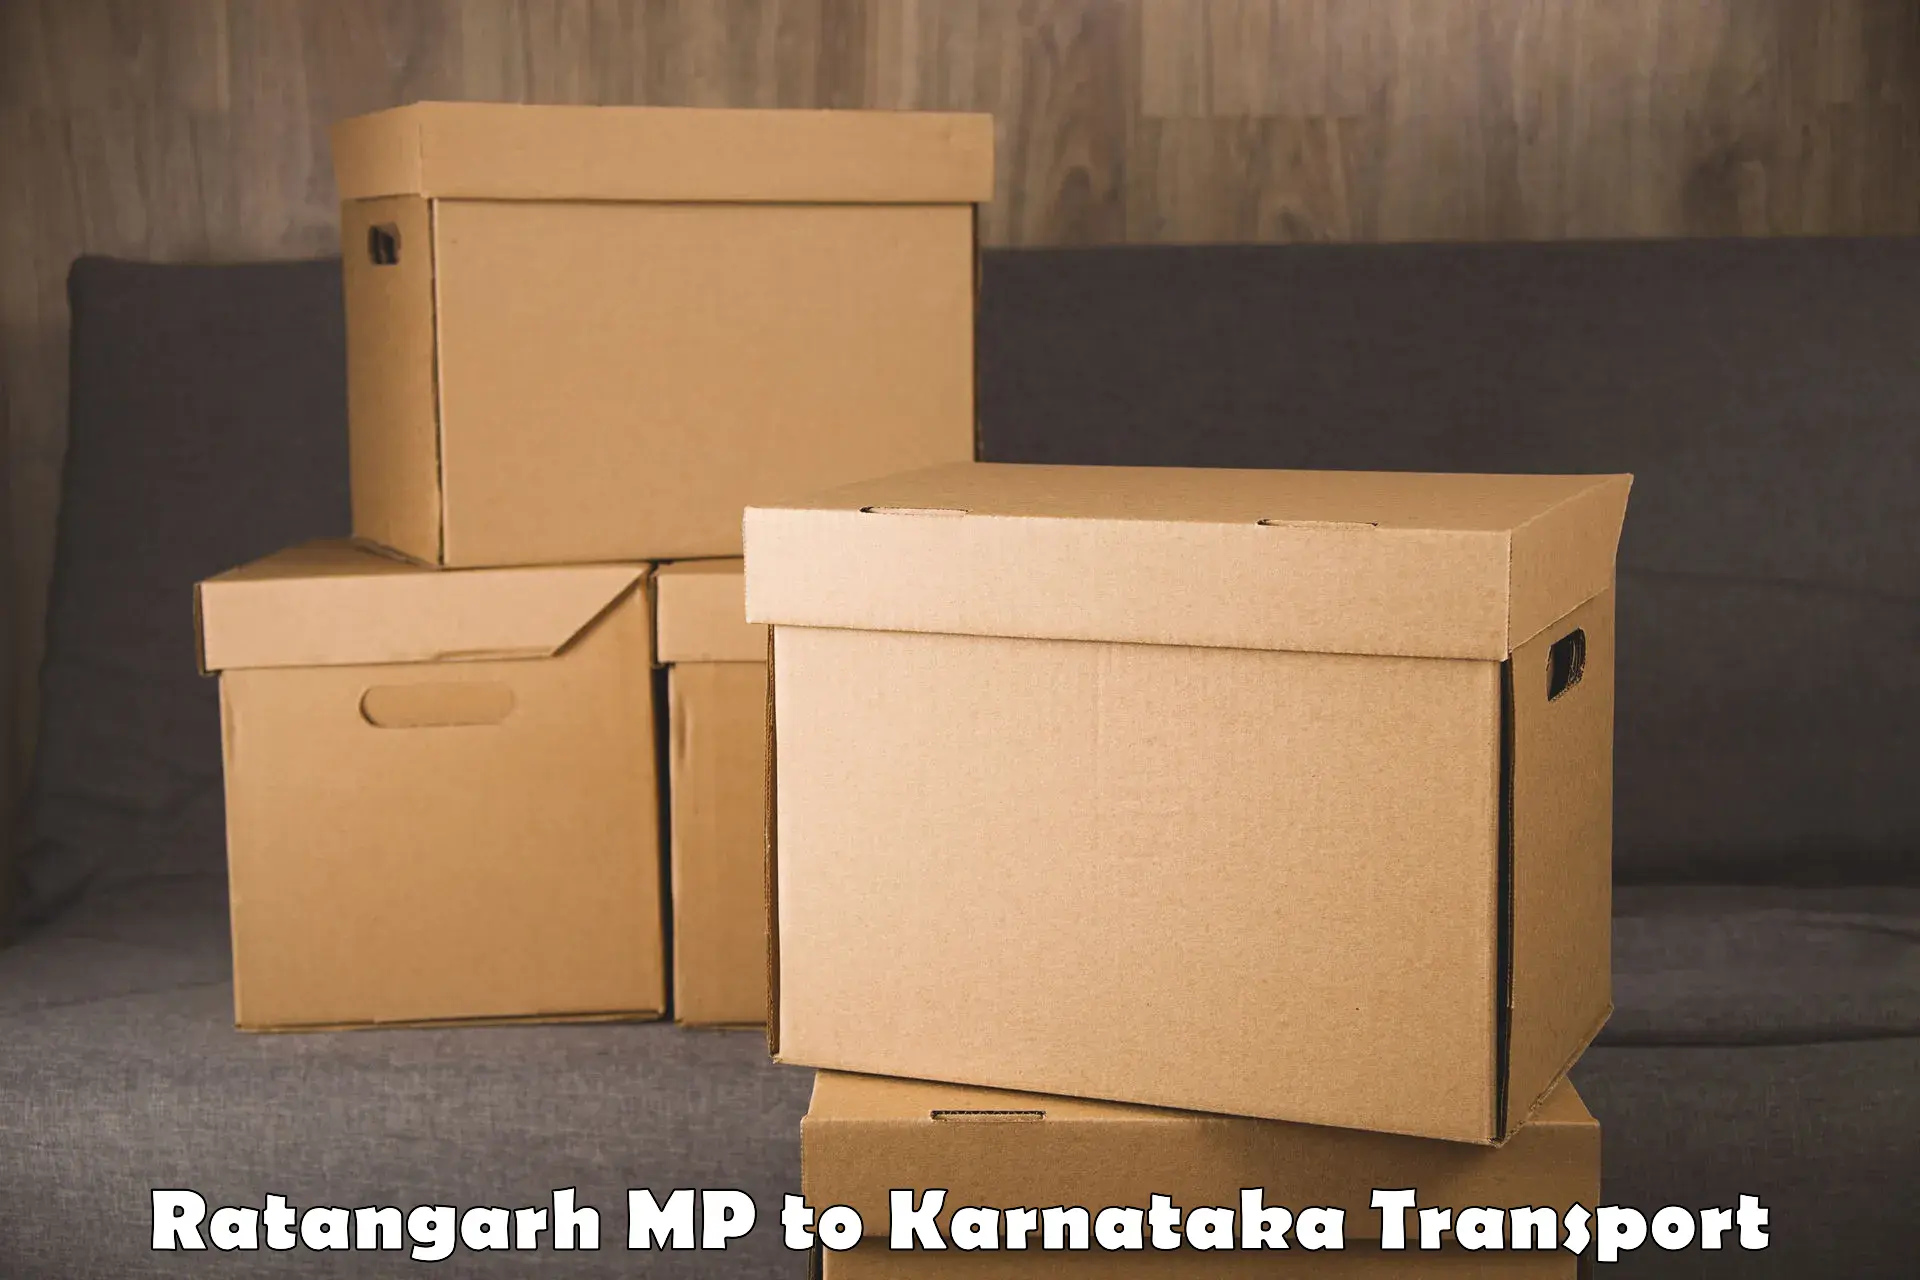 Parcel transport services Ratangarh MP to Bangalore